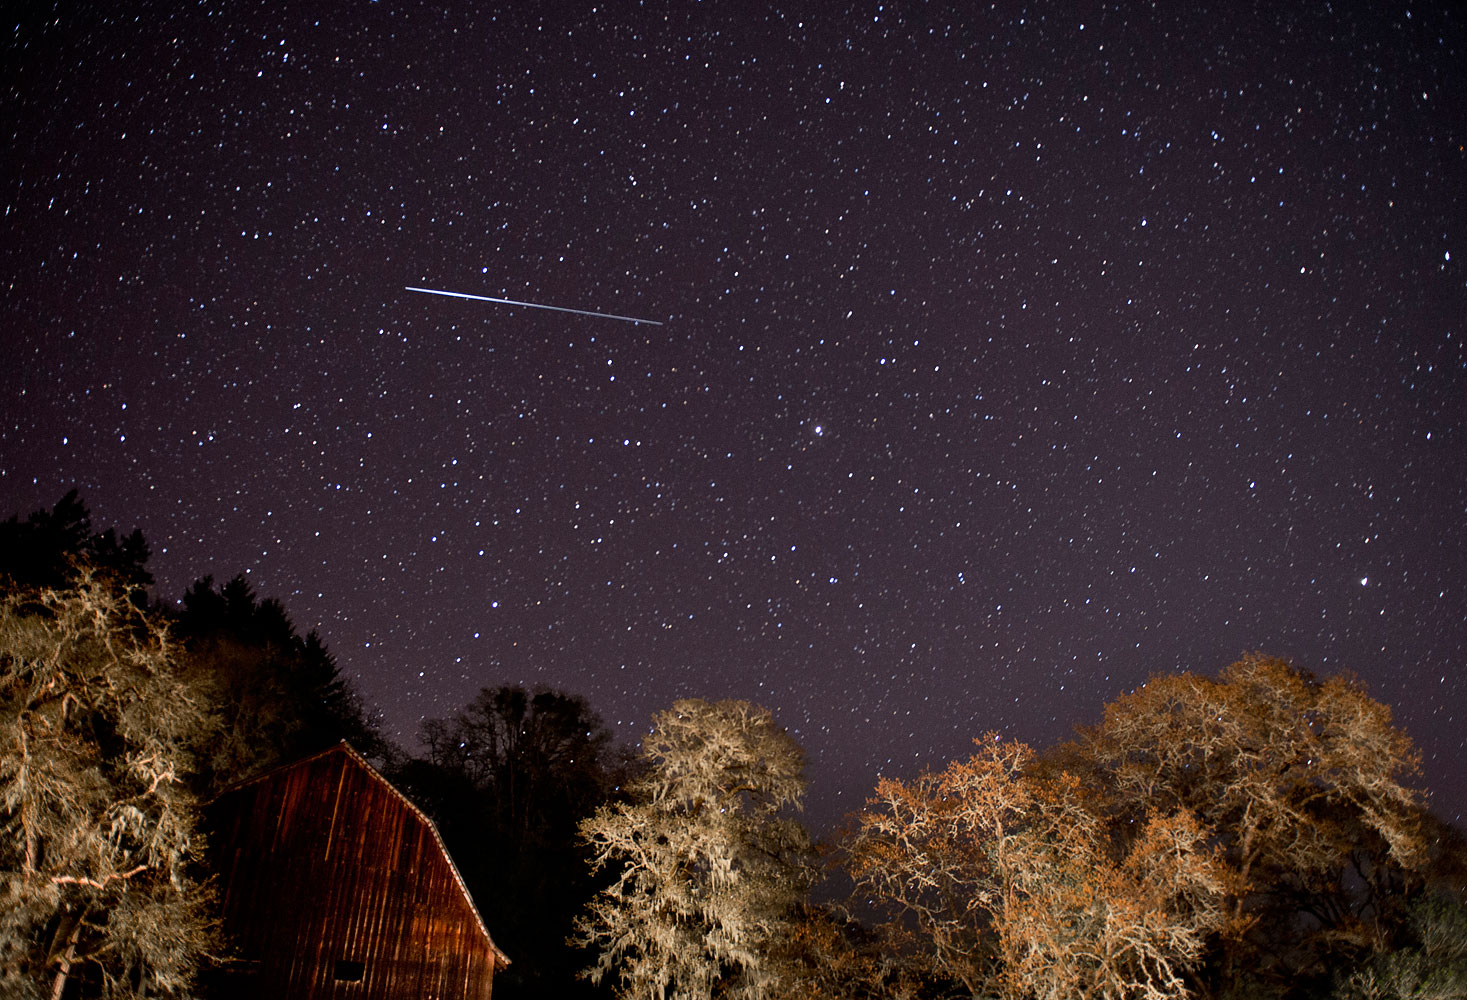 A meteor from the Lyrid meteor shower streaks through the sky above a barn along a country road near Oakland, Ore. April 21, 2012. (Robin Loznak&amp;mdash;Zuma Press/Corbis)